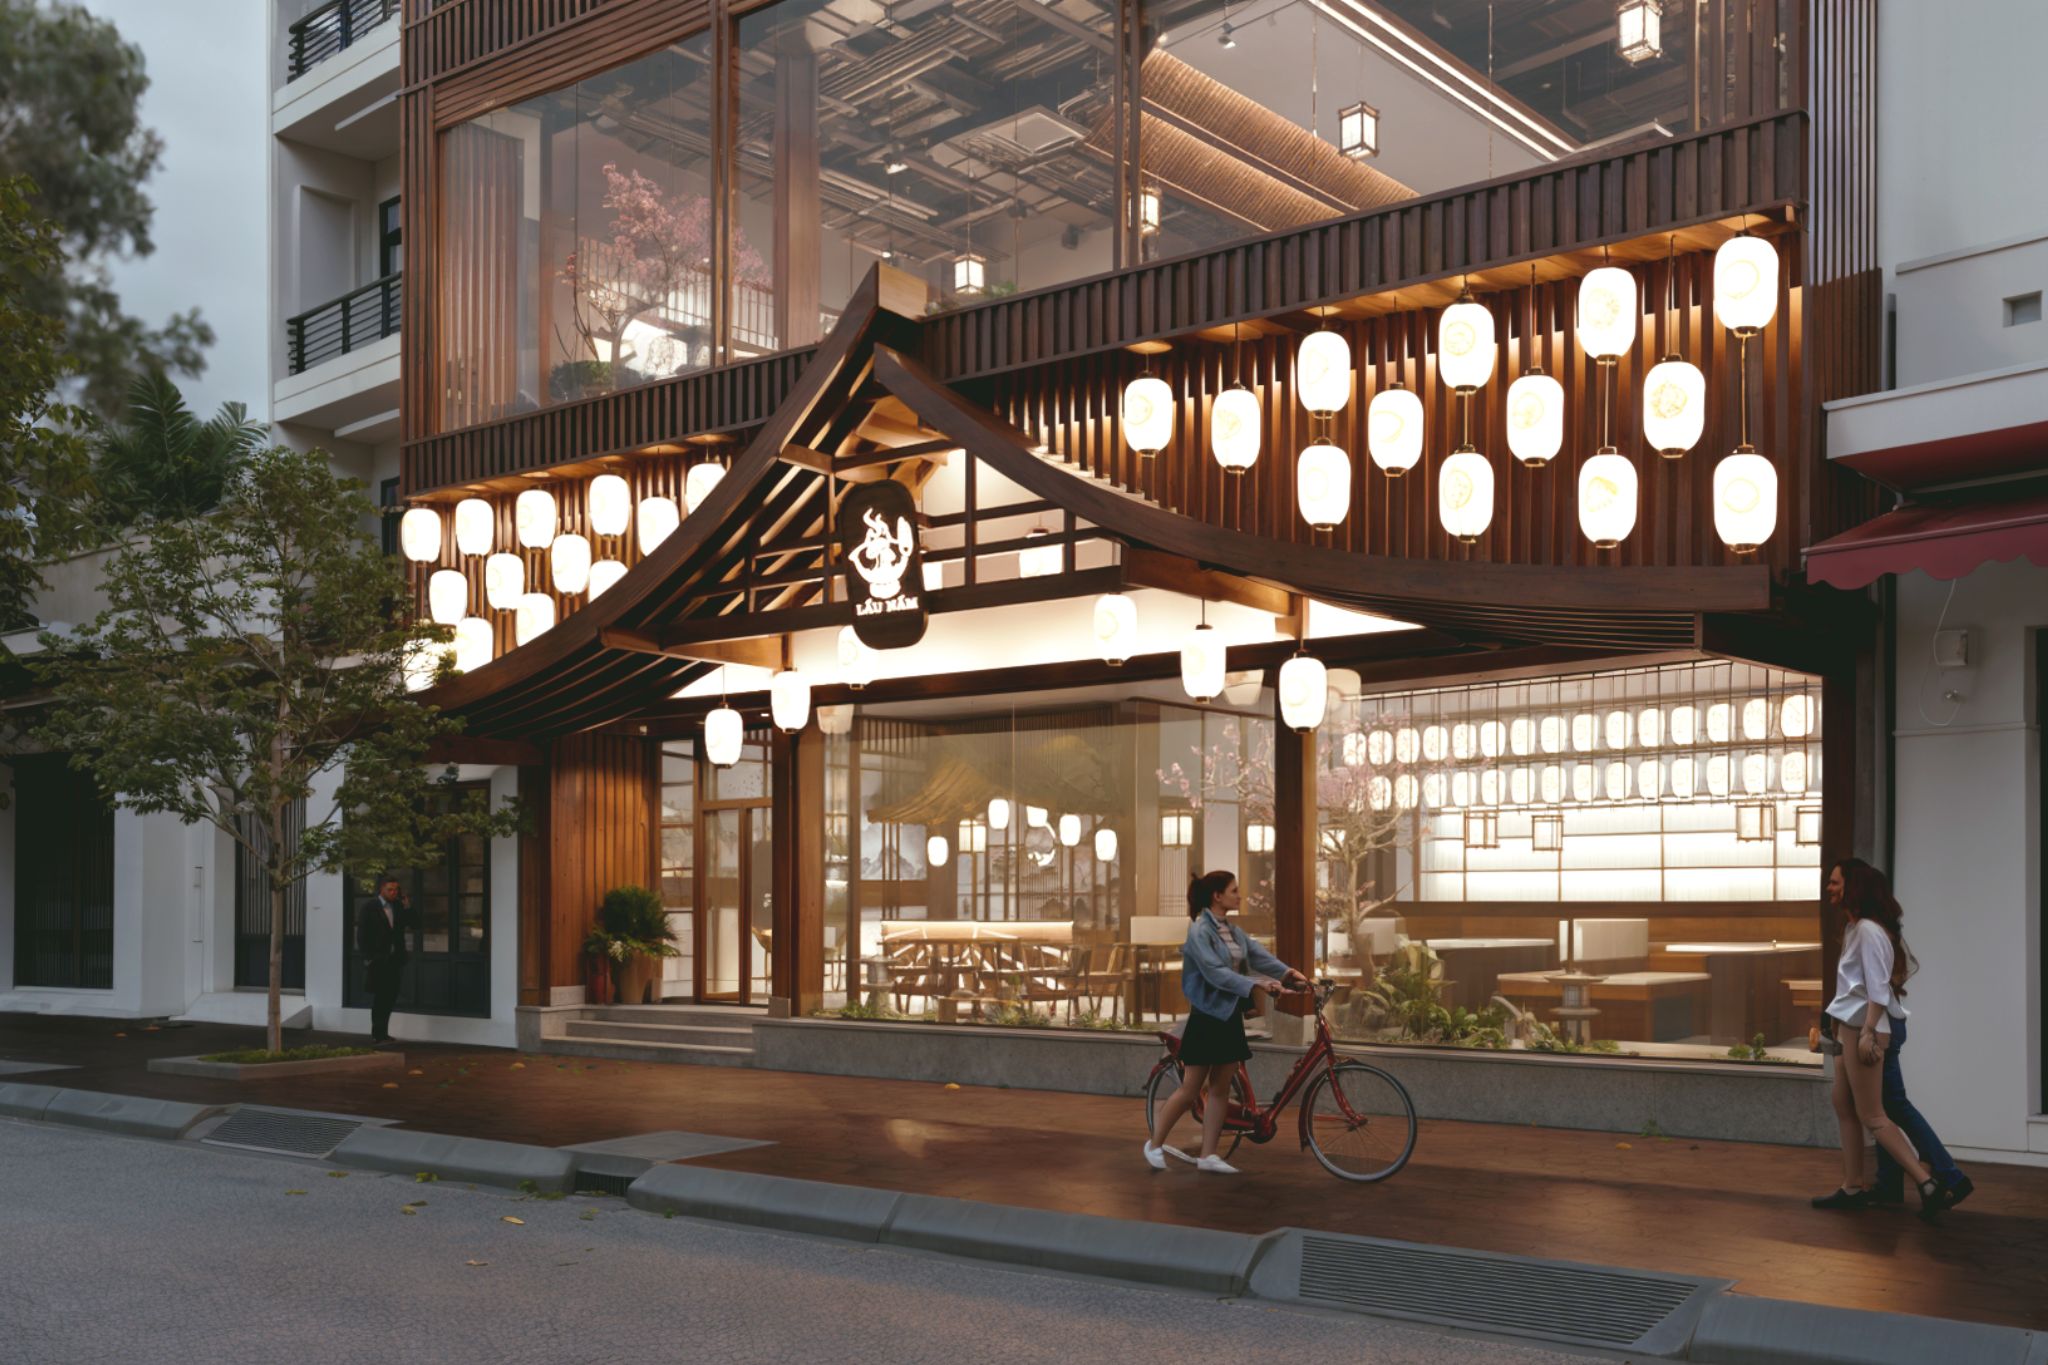 The design of the Okita Mushroom Hotpot Restaurant